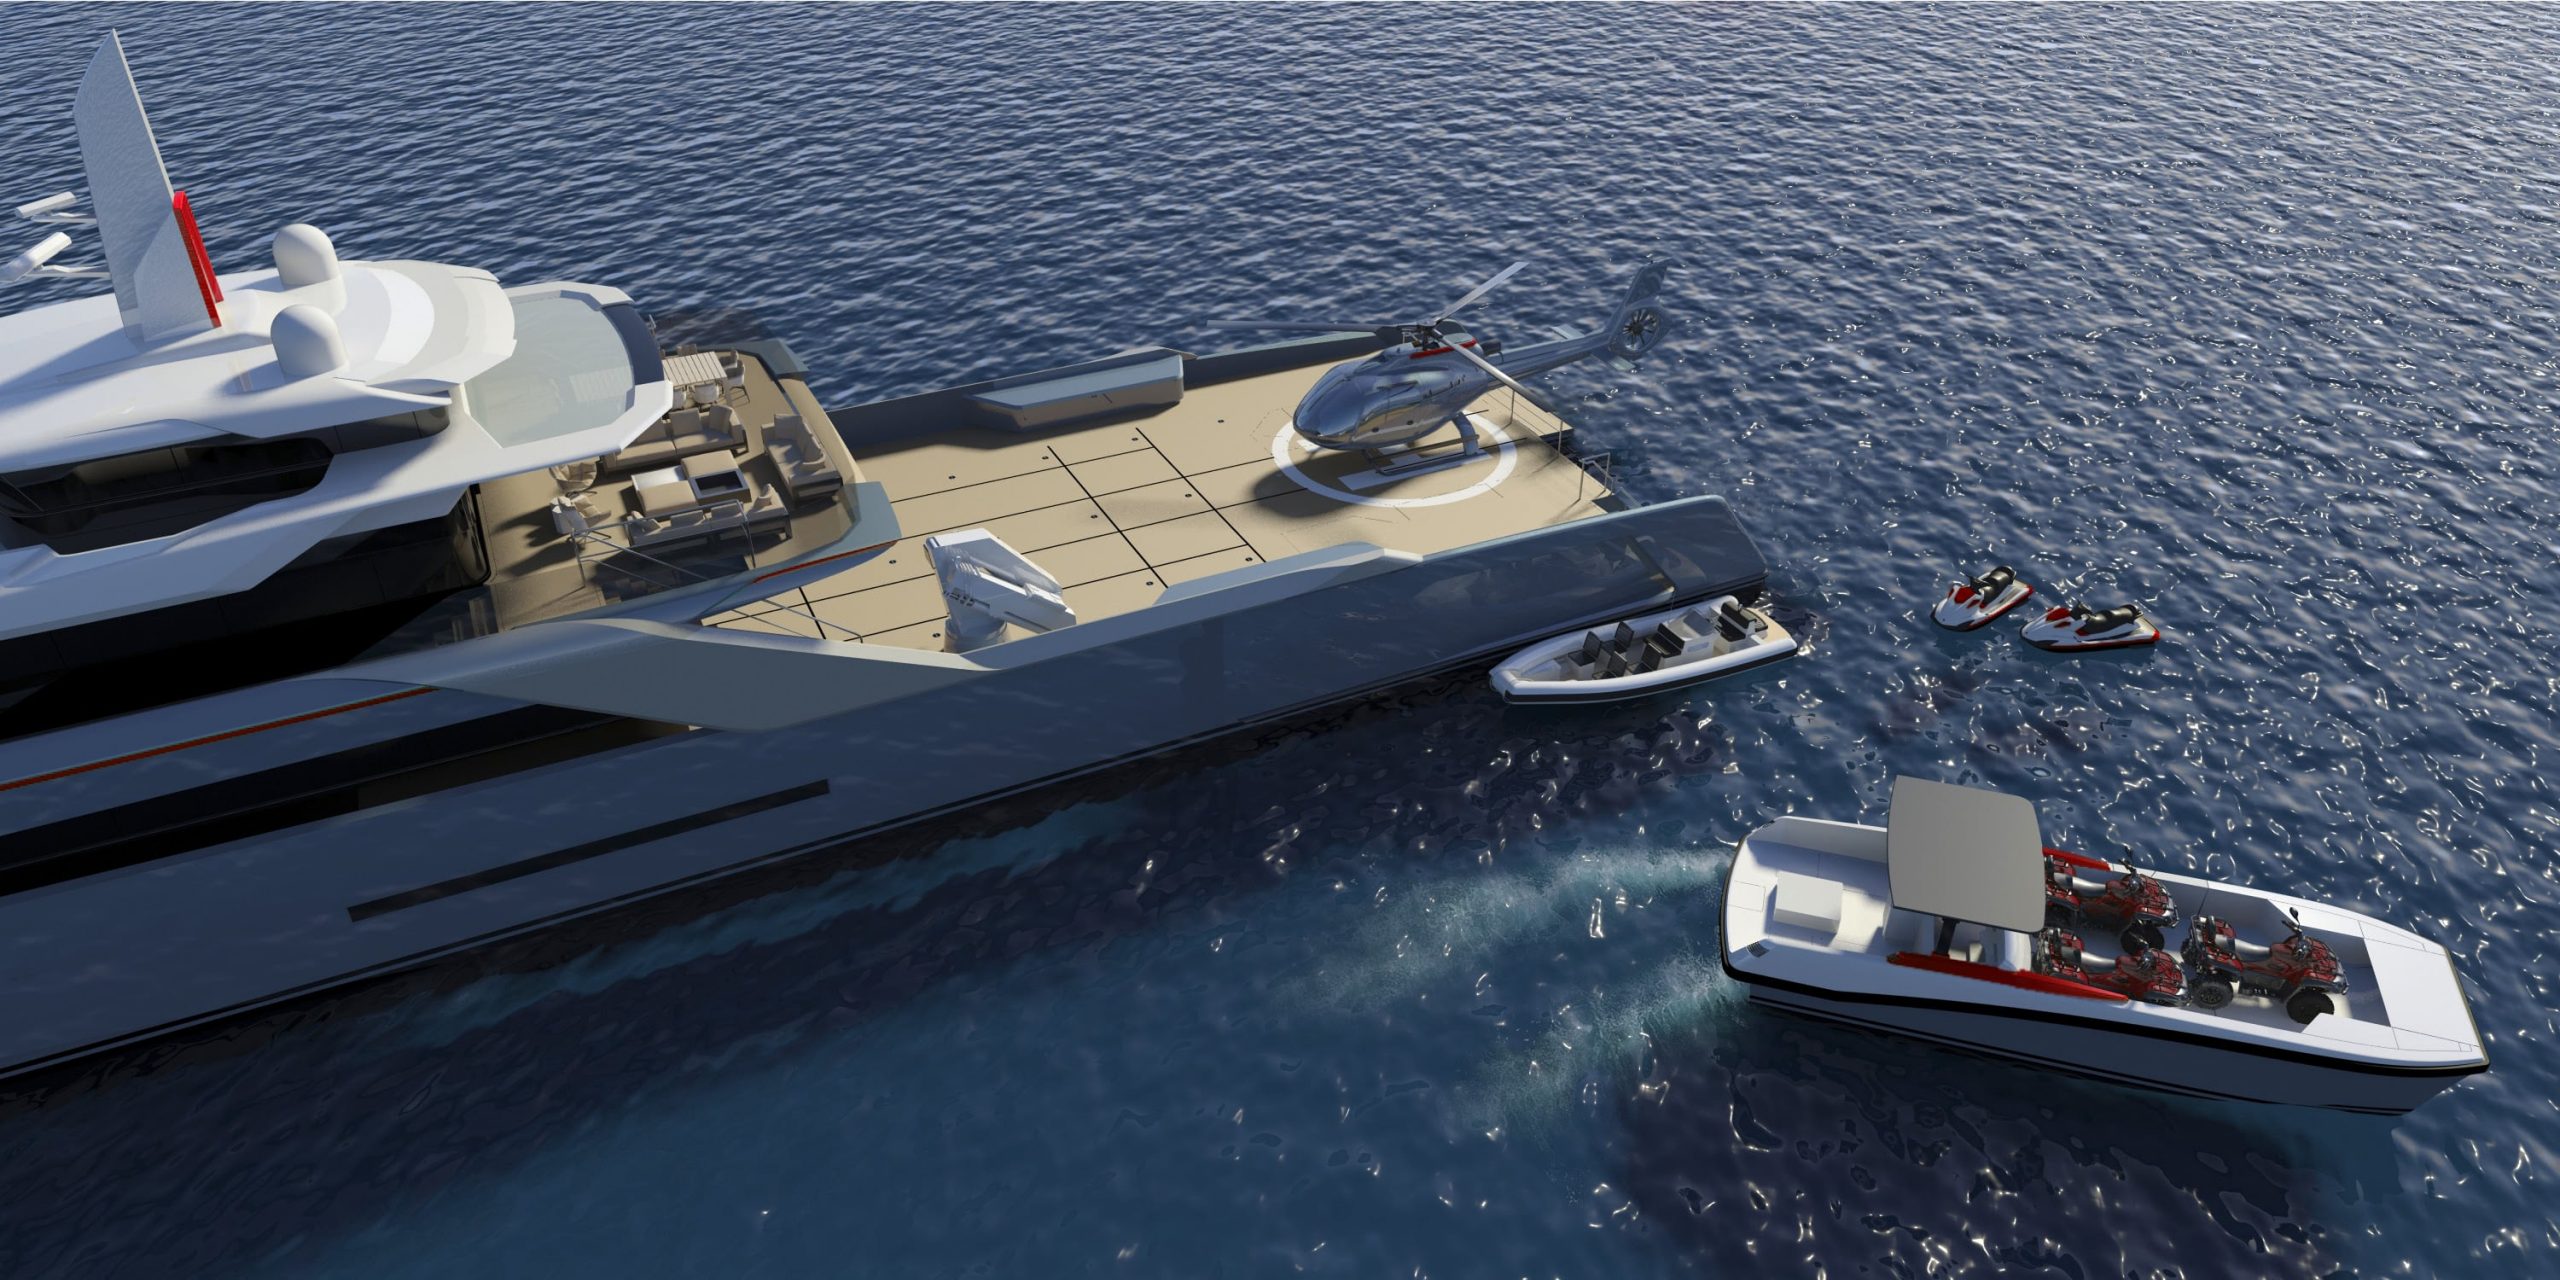 Echo Yachts Superiate HSV apoio humanitário - boat shopping